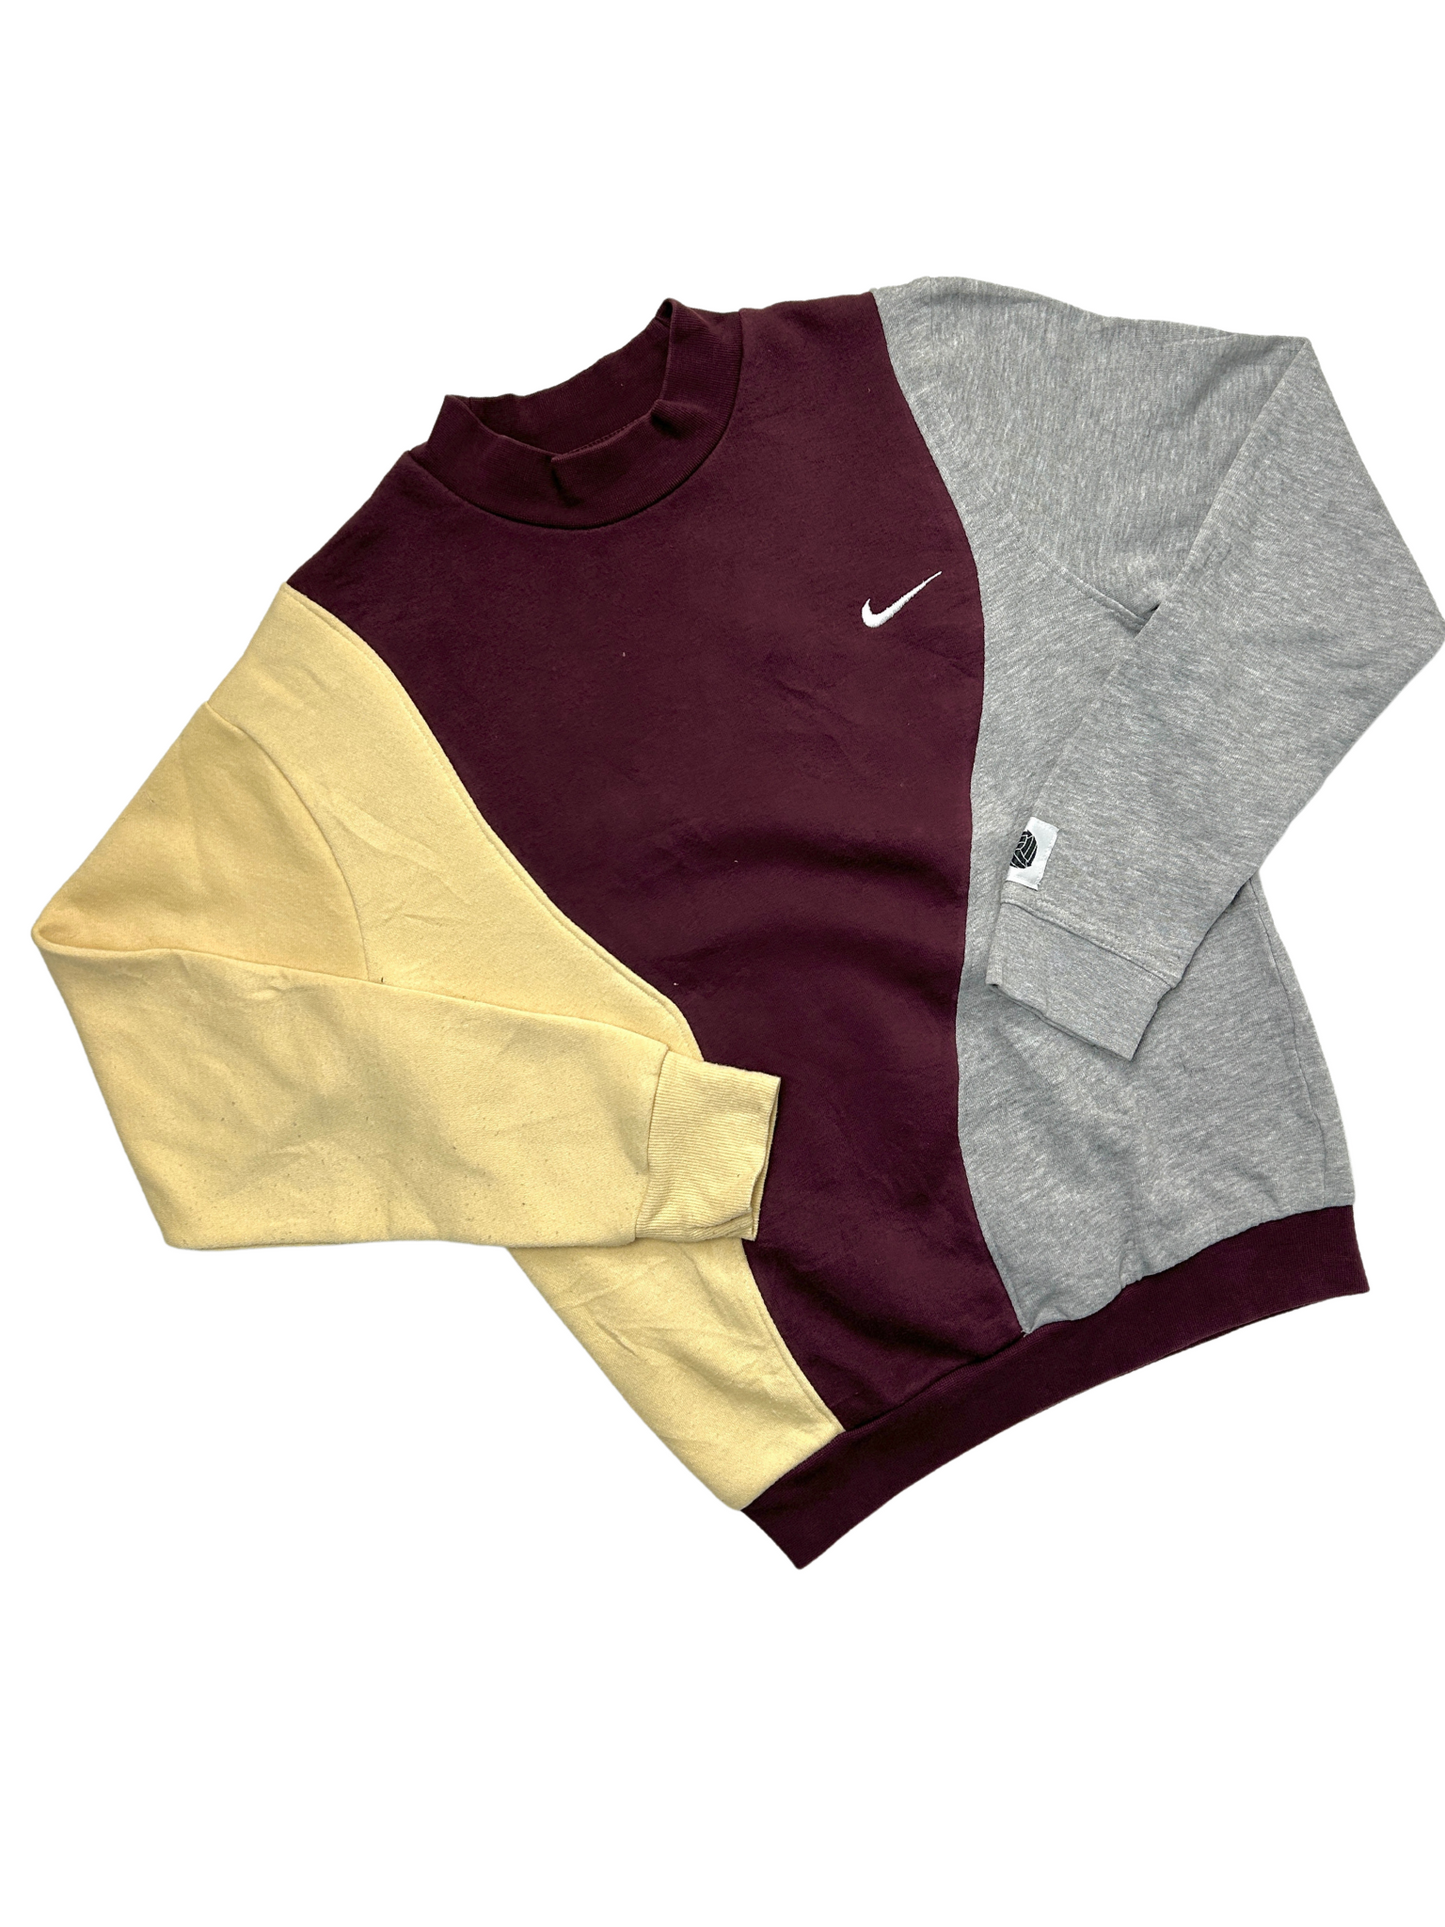 Reworked Nike Sweatshirt #26 (Women's XS)